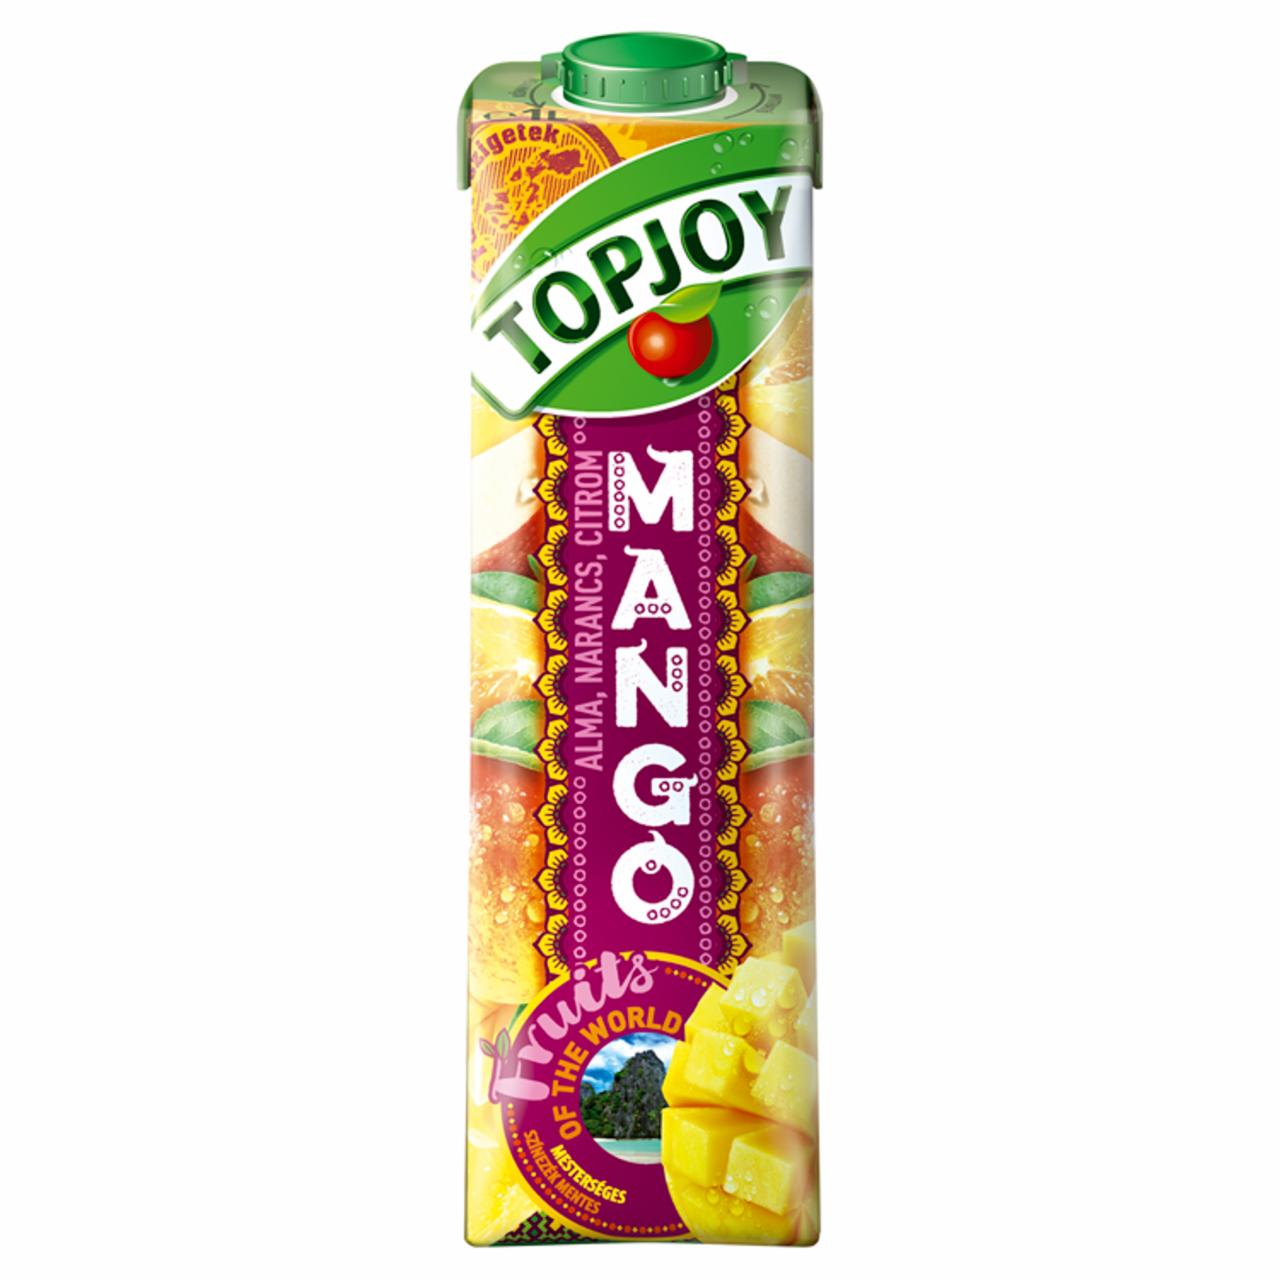 Képek - Topjoy Fruits of the World mangó-alma-narancs-citrom ital 1 l